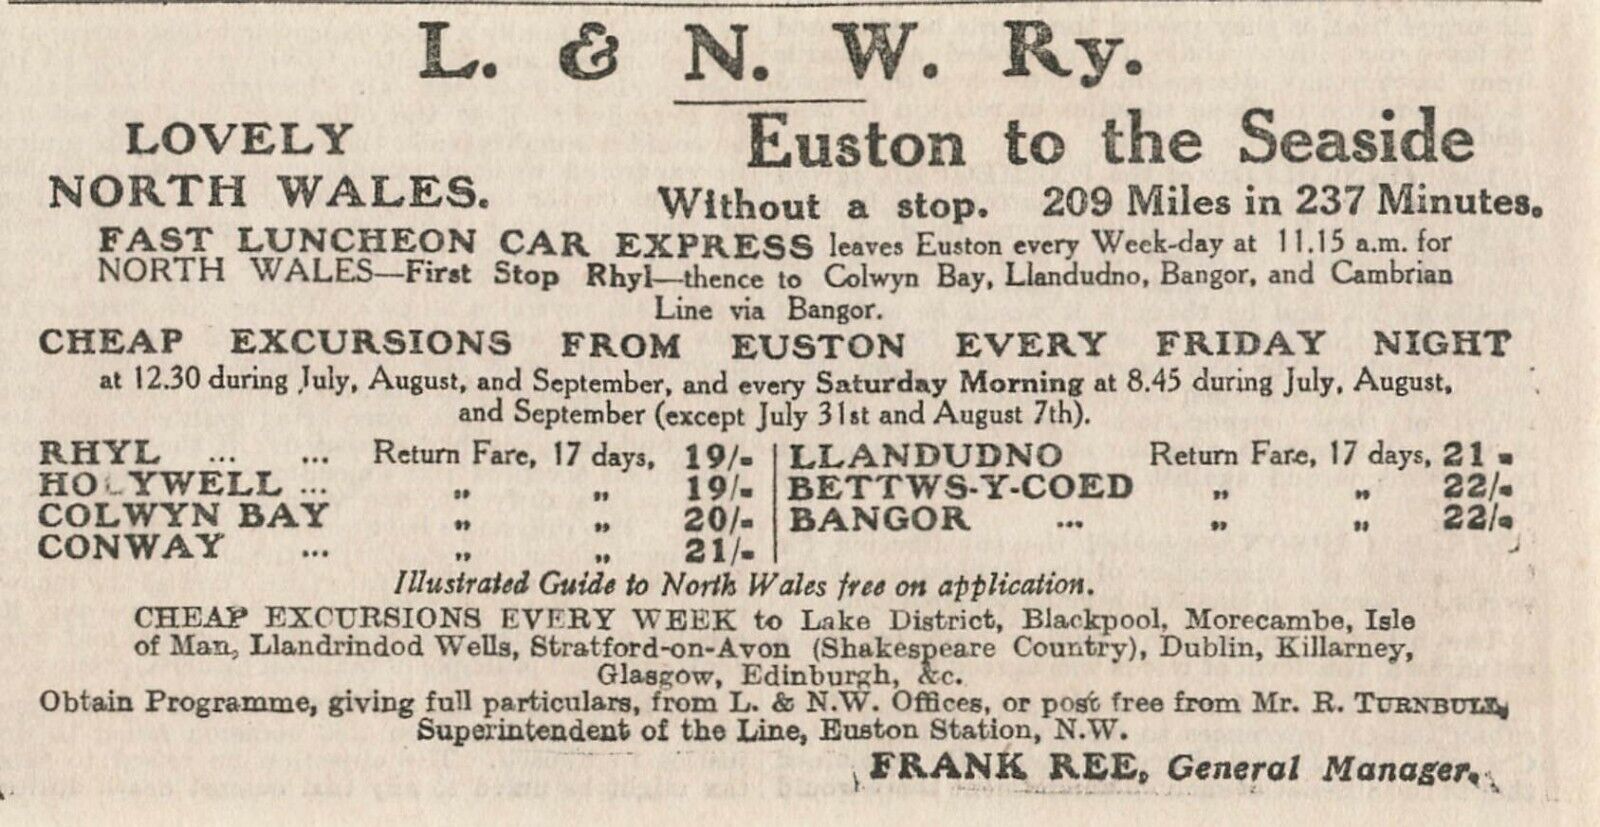 London & North Western Railway Euston To The Seaside 1909 Advert L&NWR